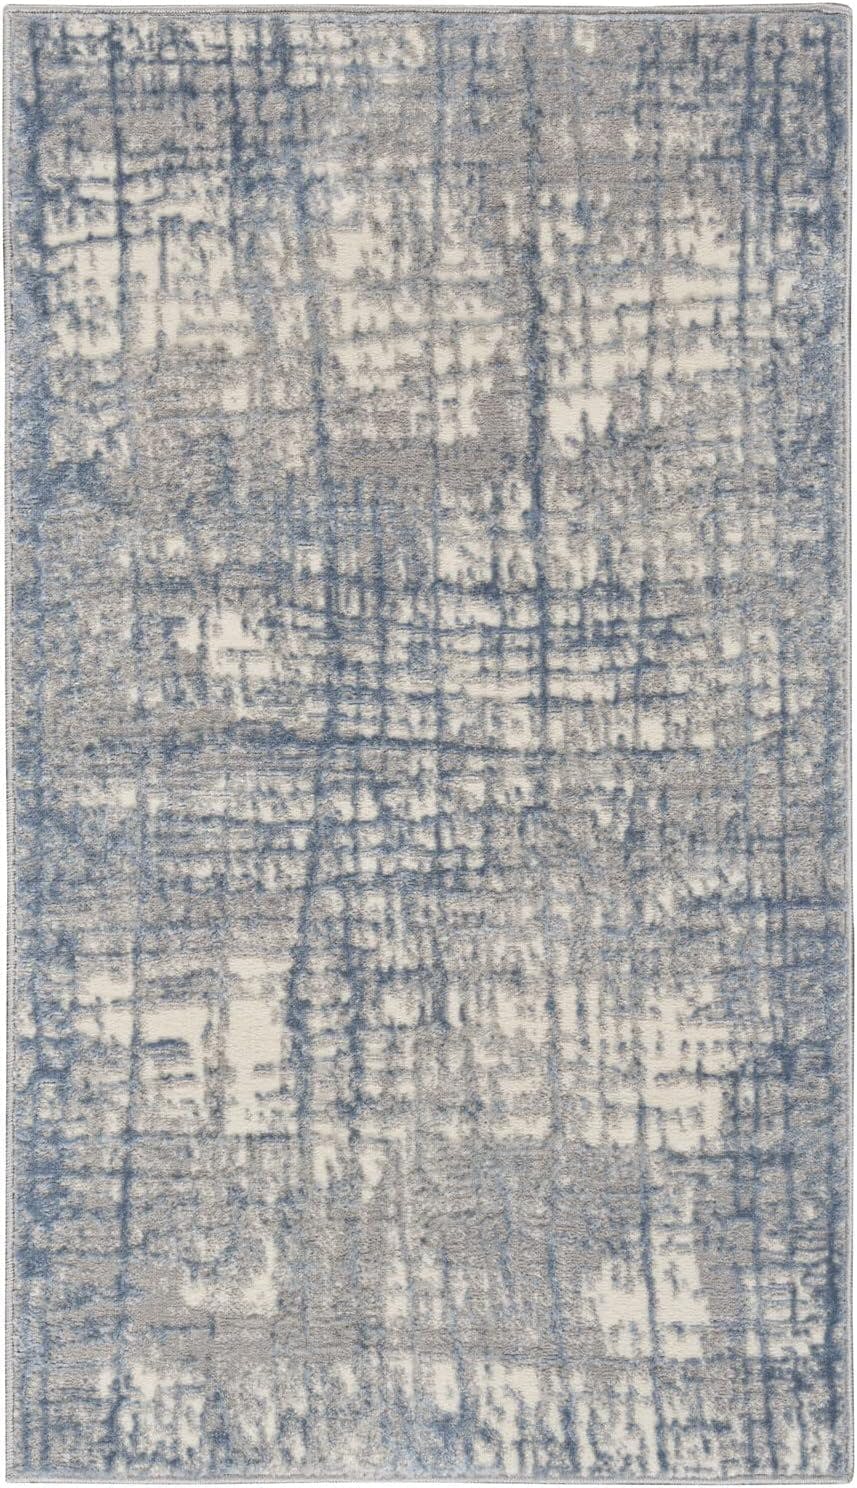 Ivory Blue Abstract Handmade Viscose Area Rug, 3'2" x 5'